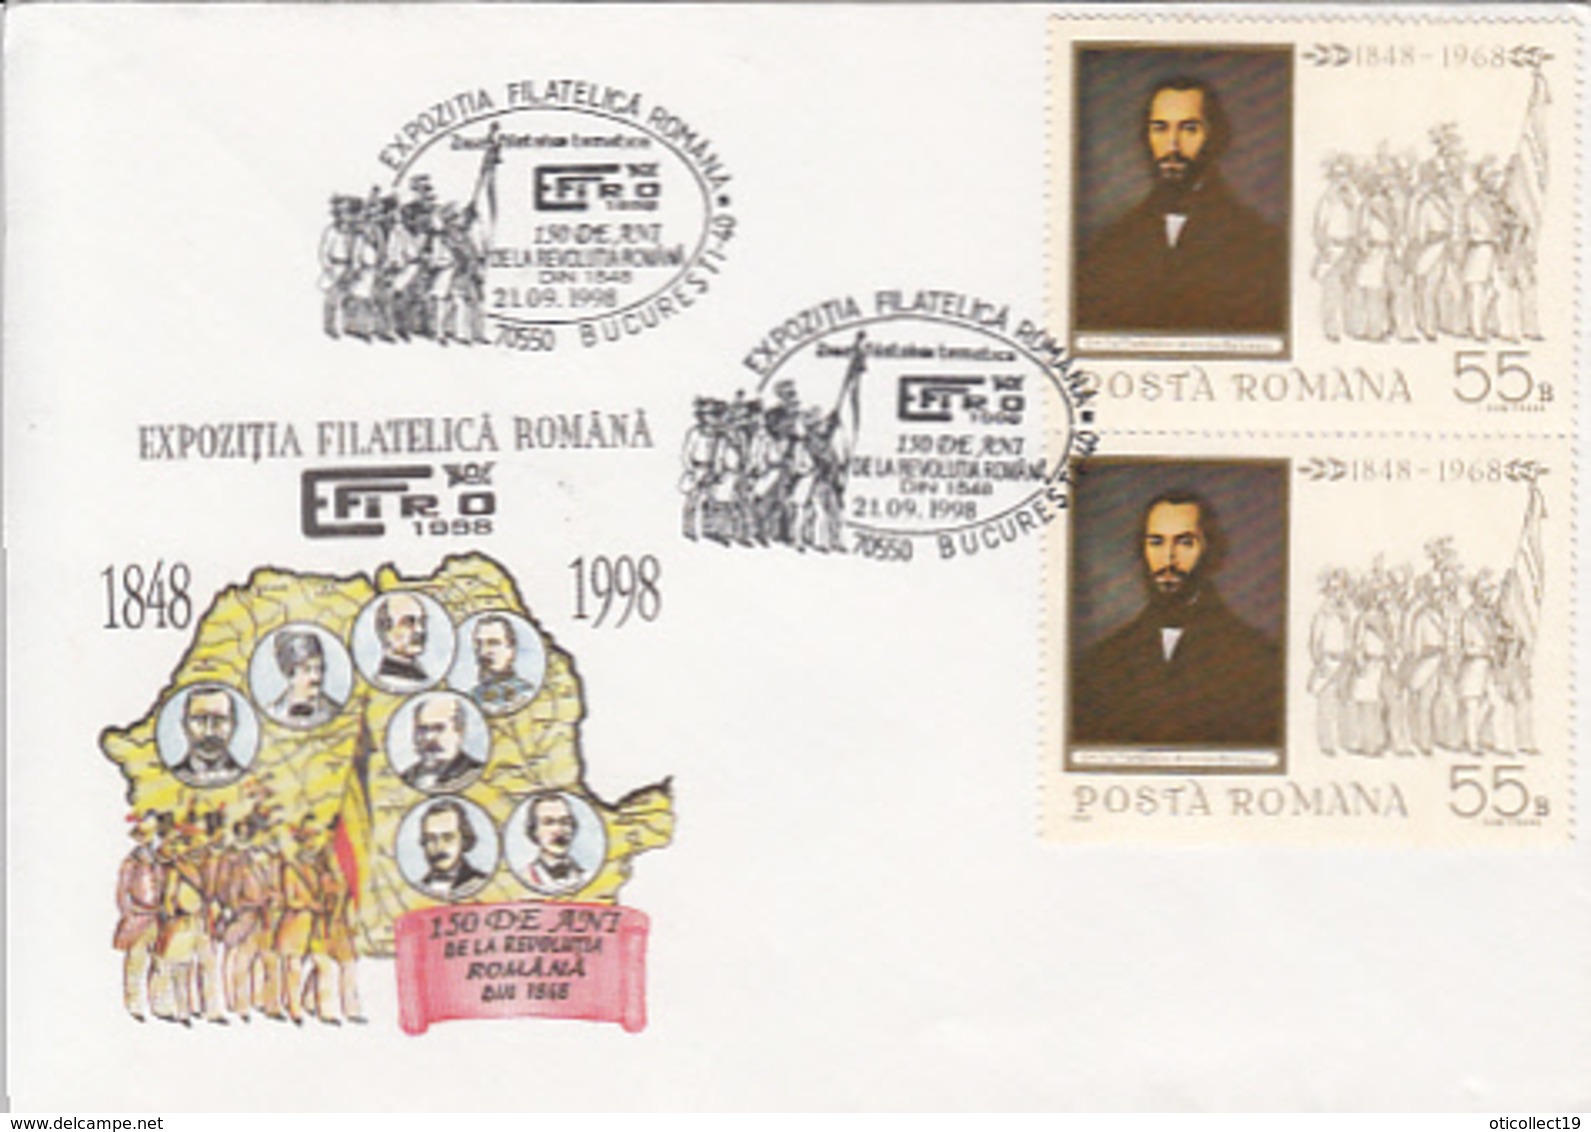 ROMANIAN 1848 REVOLUTION ANNIVERSARY, EFIRO PHILATELIC EXHIBITION, SPECIAL COVER, OVERPRINT STAMP, 1998, ROMANIA - Storia Postale